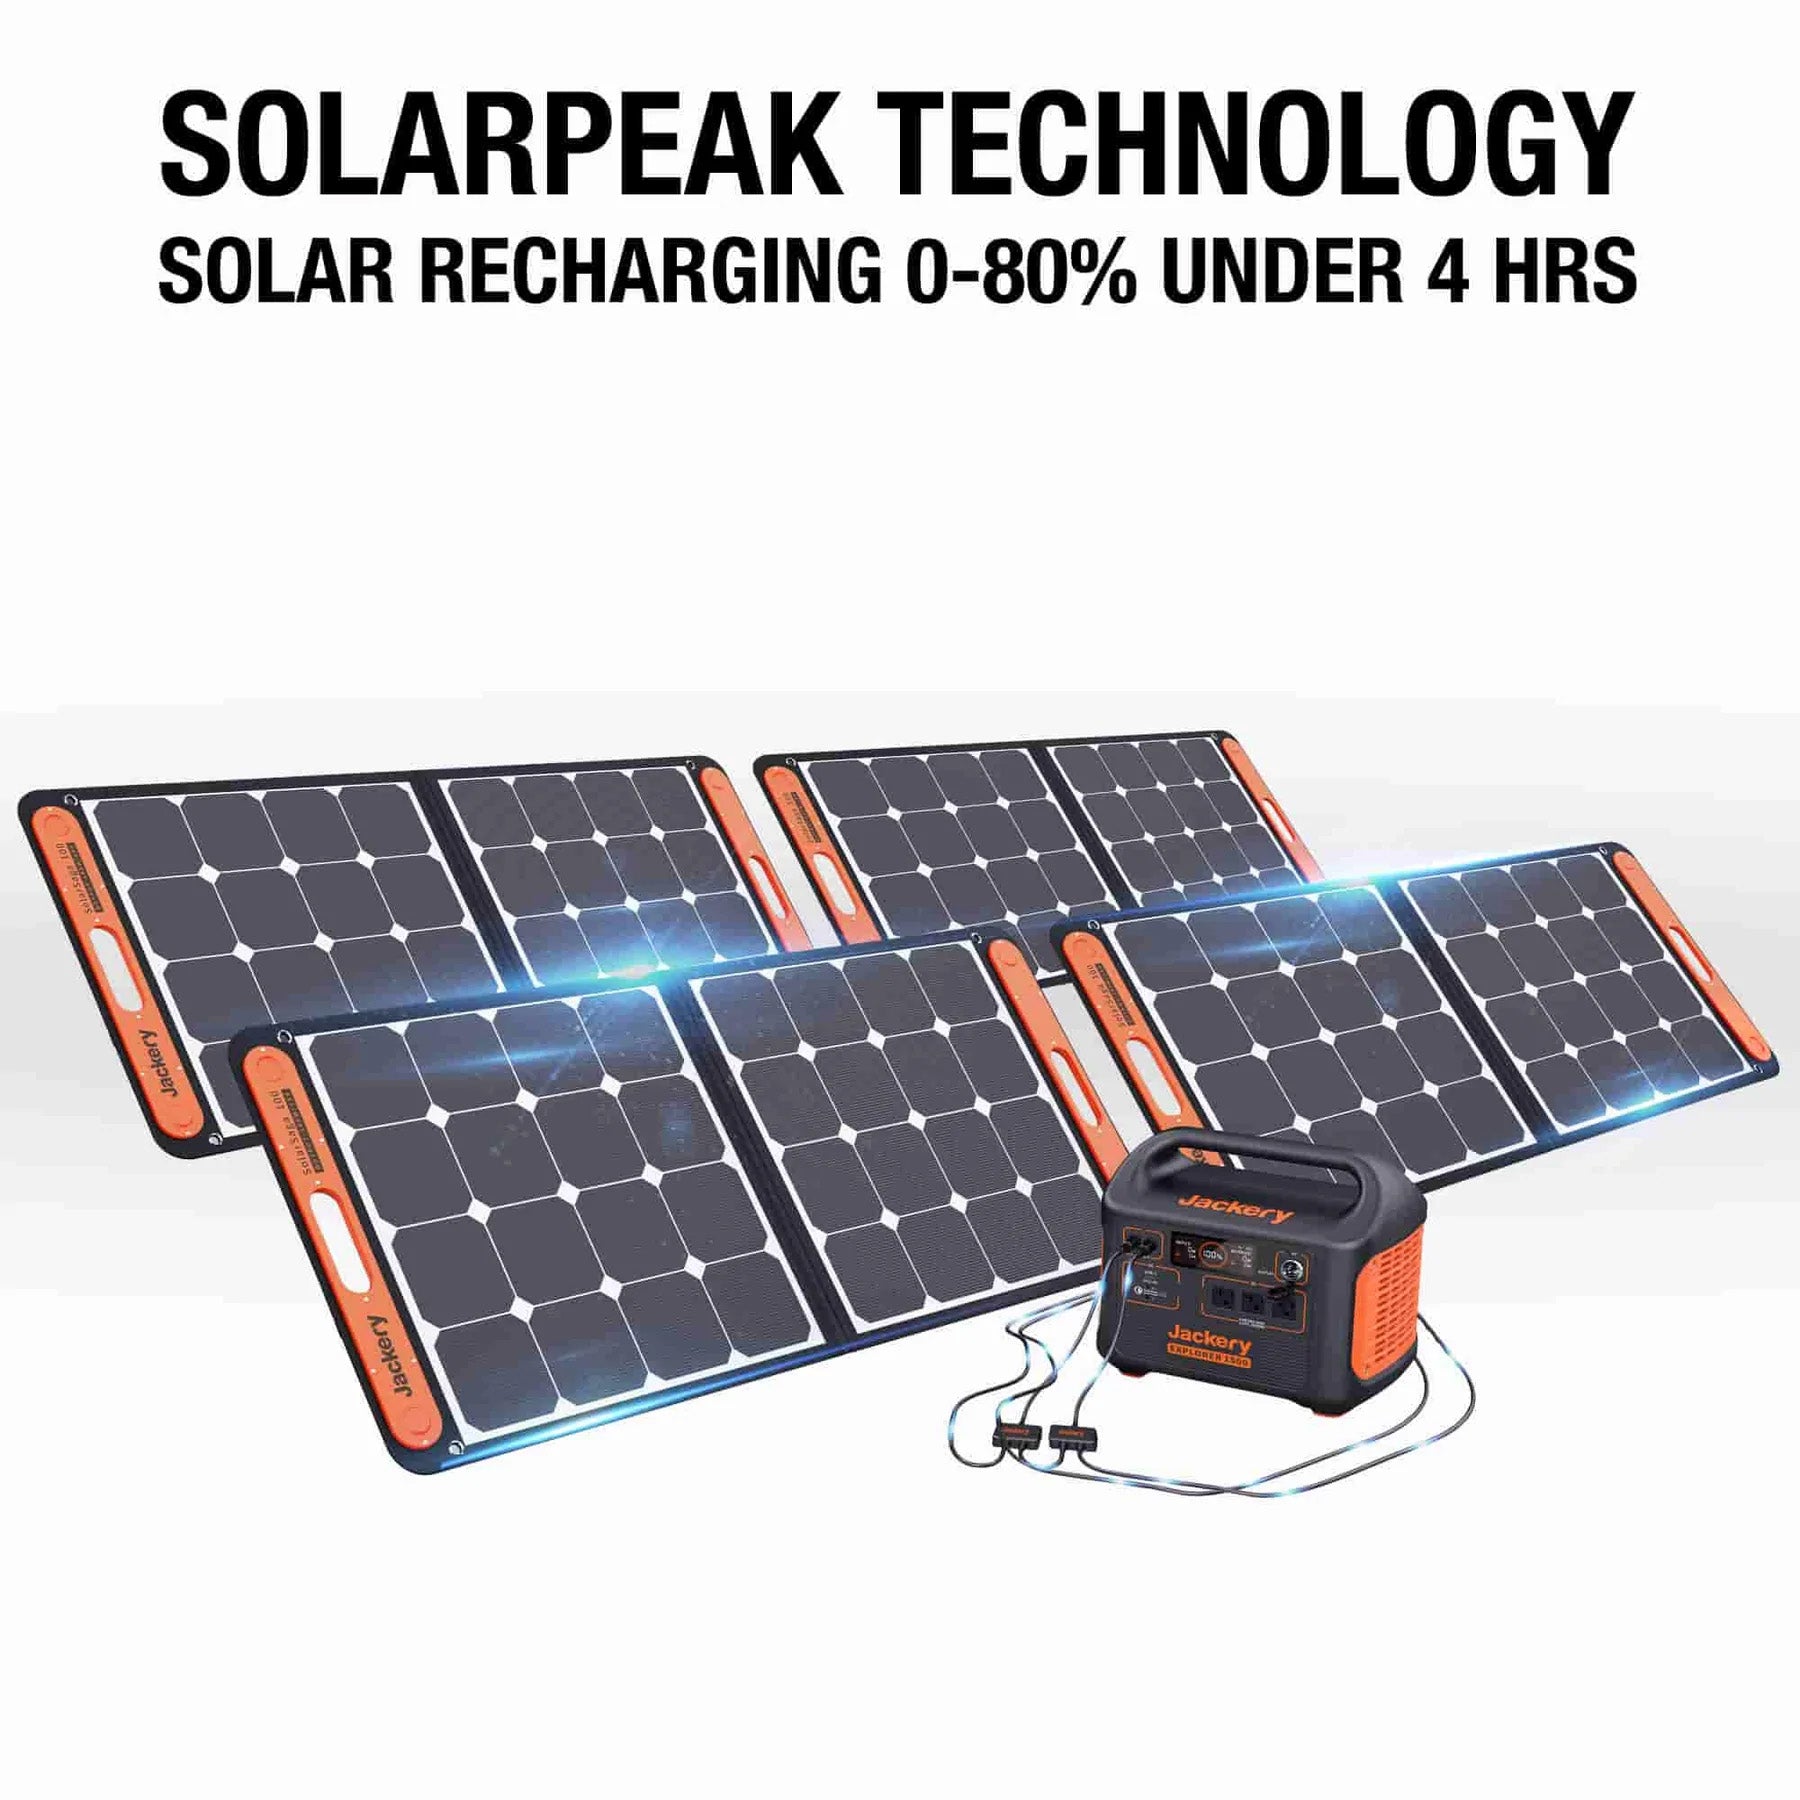 Jackery Solar Generator 1500 With SolarPeak Technology